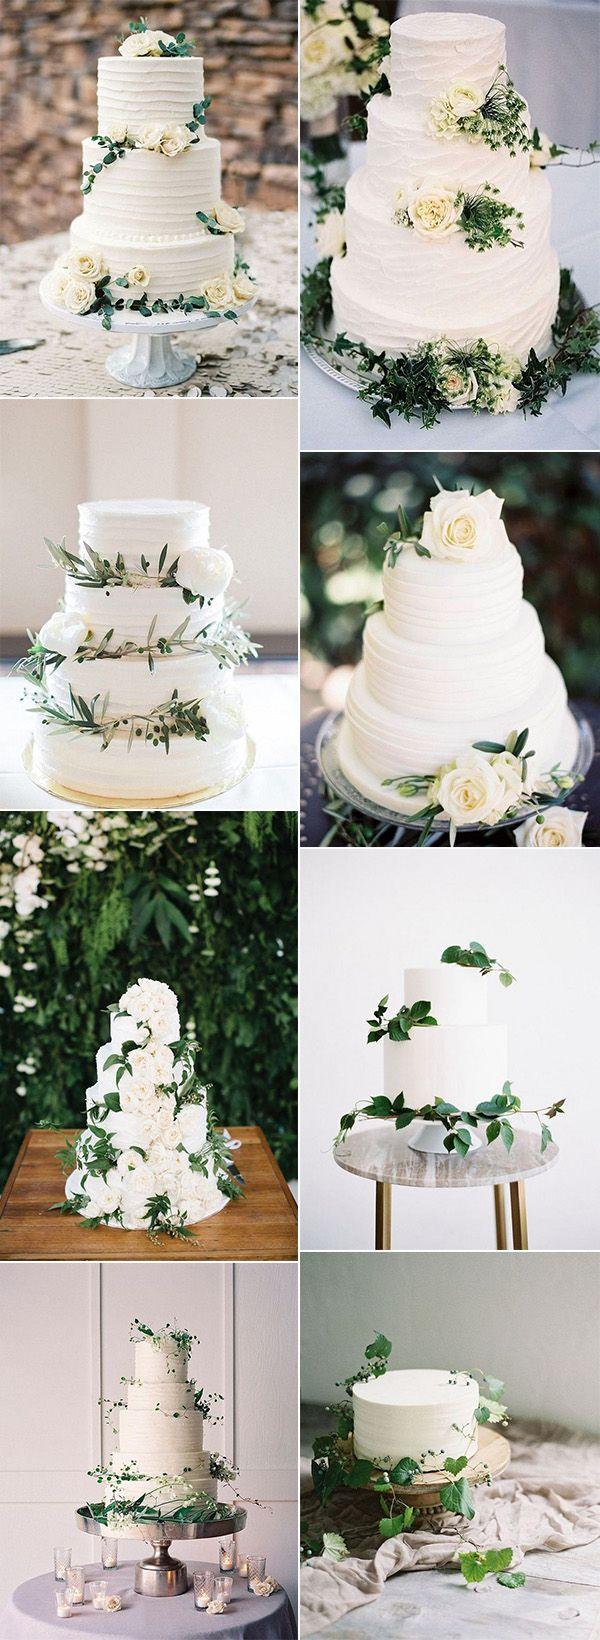 Hochzeit - 15 Amazing White And Green Elegant Wedding Cakes